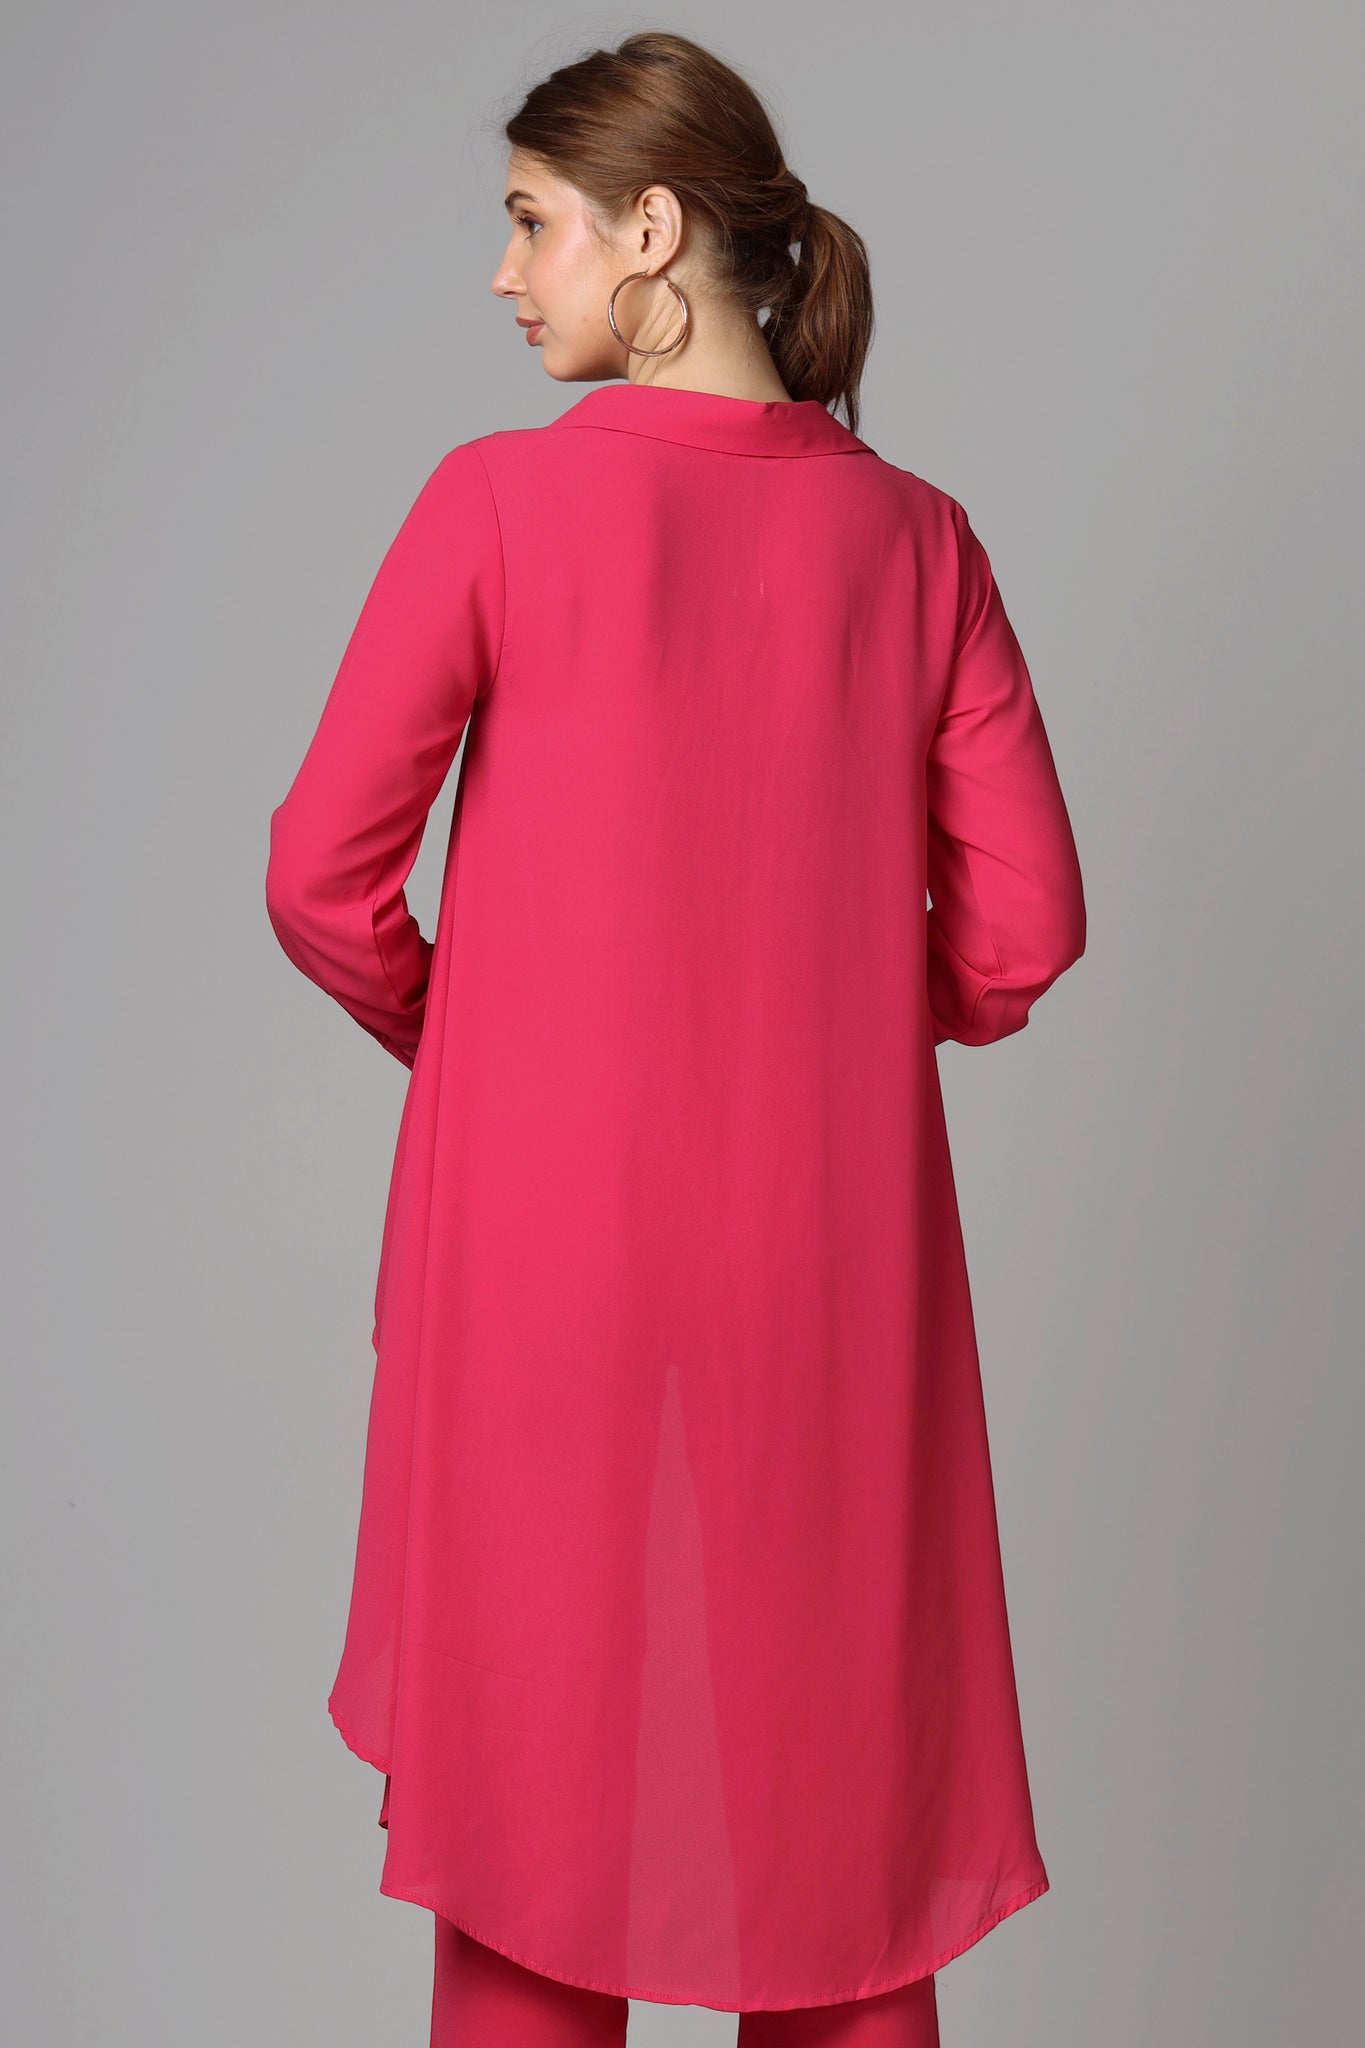 Exclusive Pink Dip Hem Oversized Shirt For Women